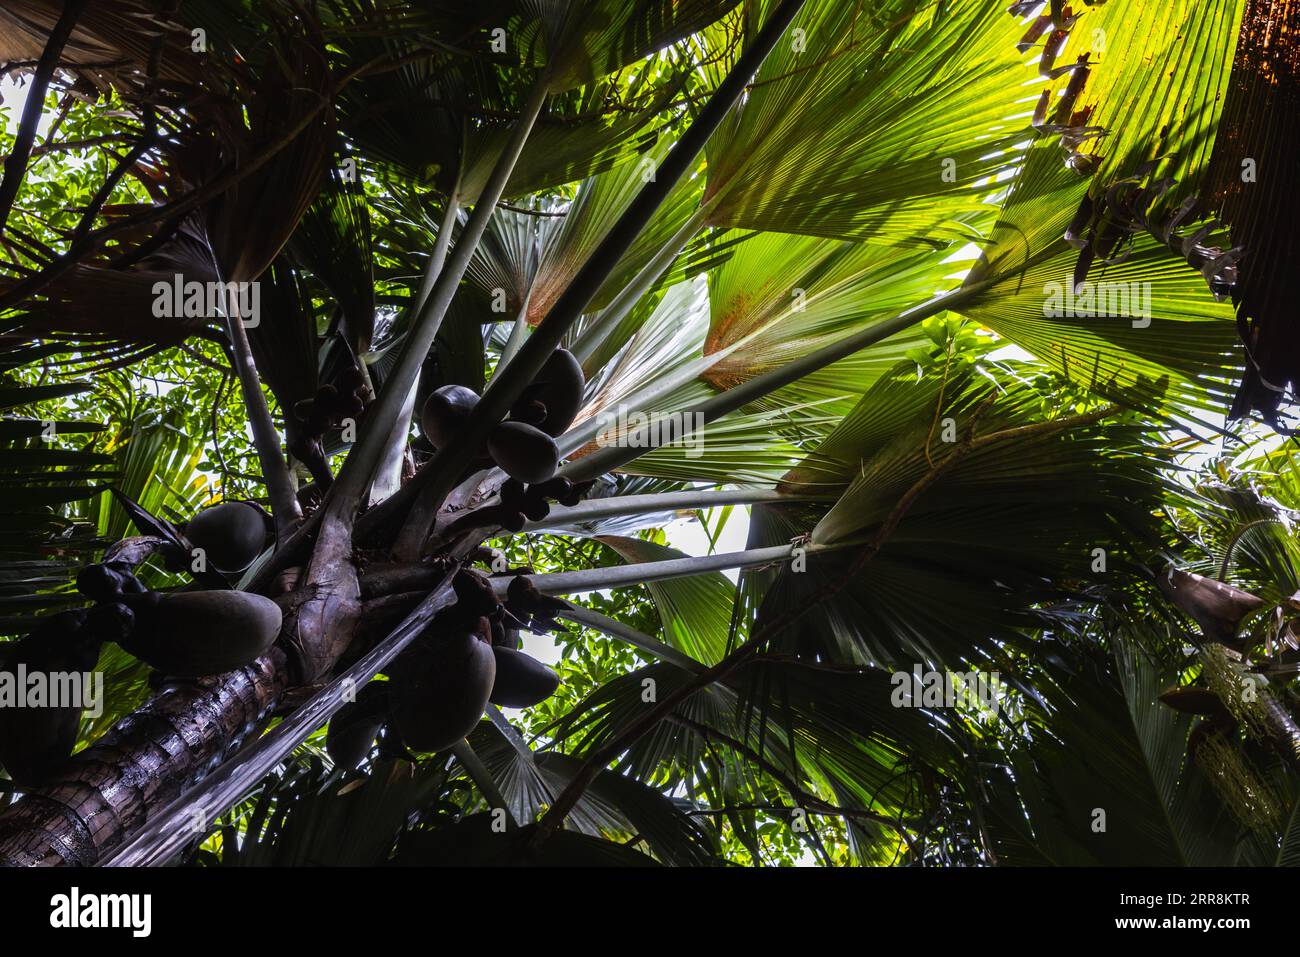 Coco de mer fruits, Lodoicea palm tree. Vallee de Mai, Praslin island ...